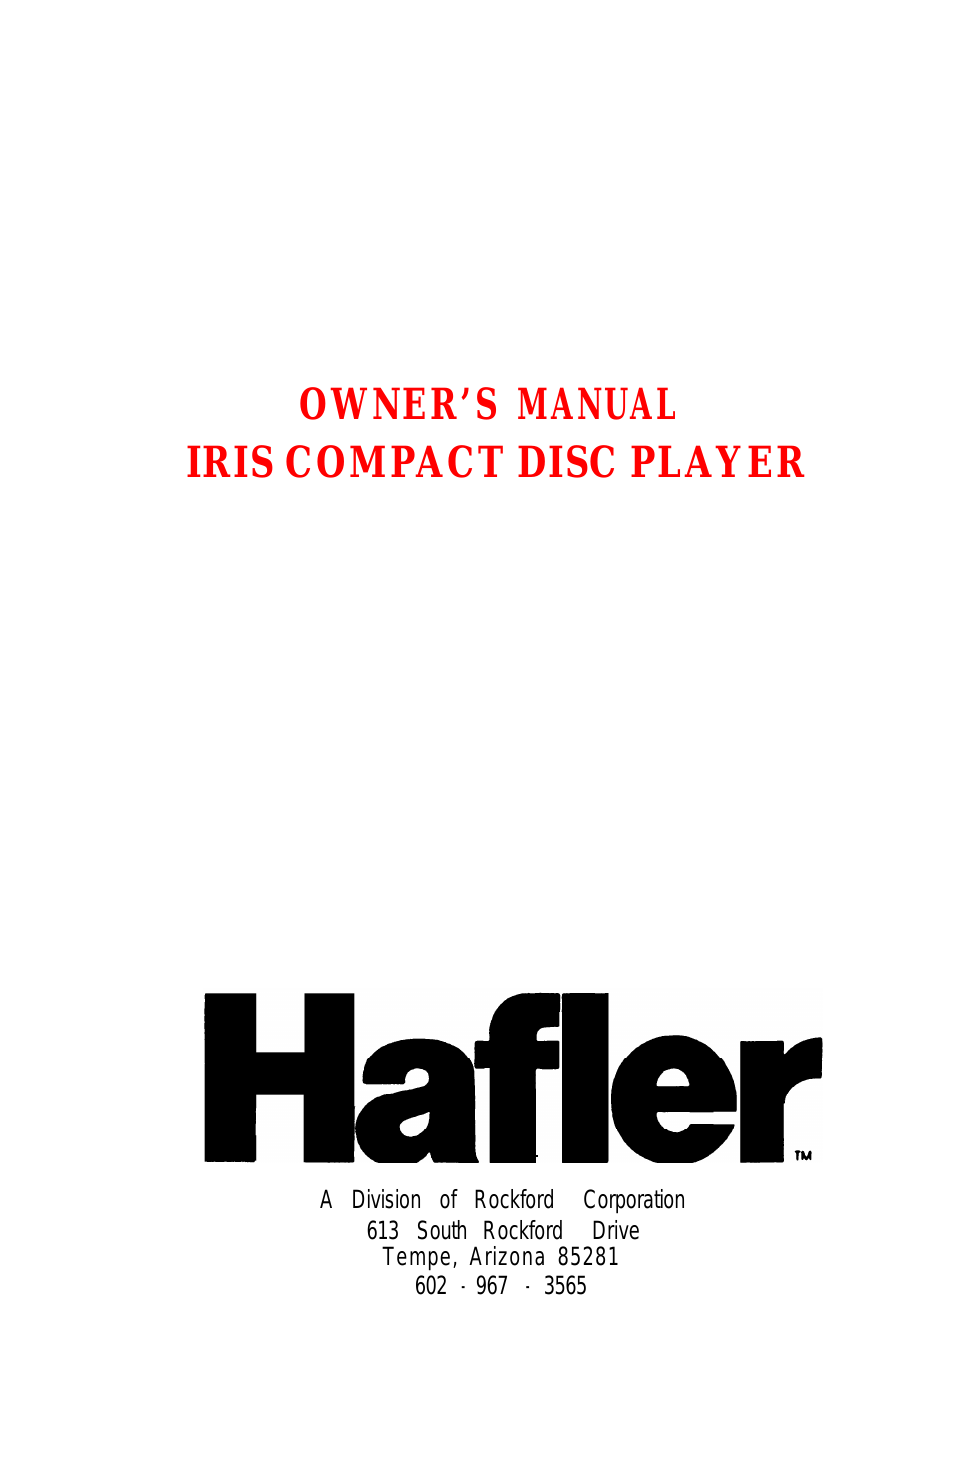 IRIS COMPACT DISC PLAYER